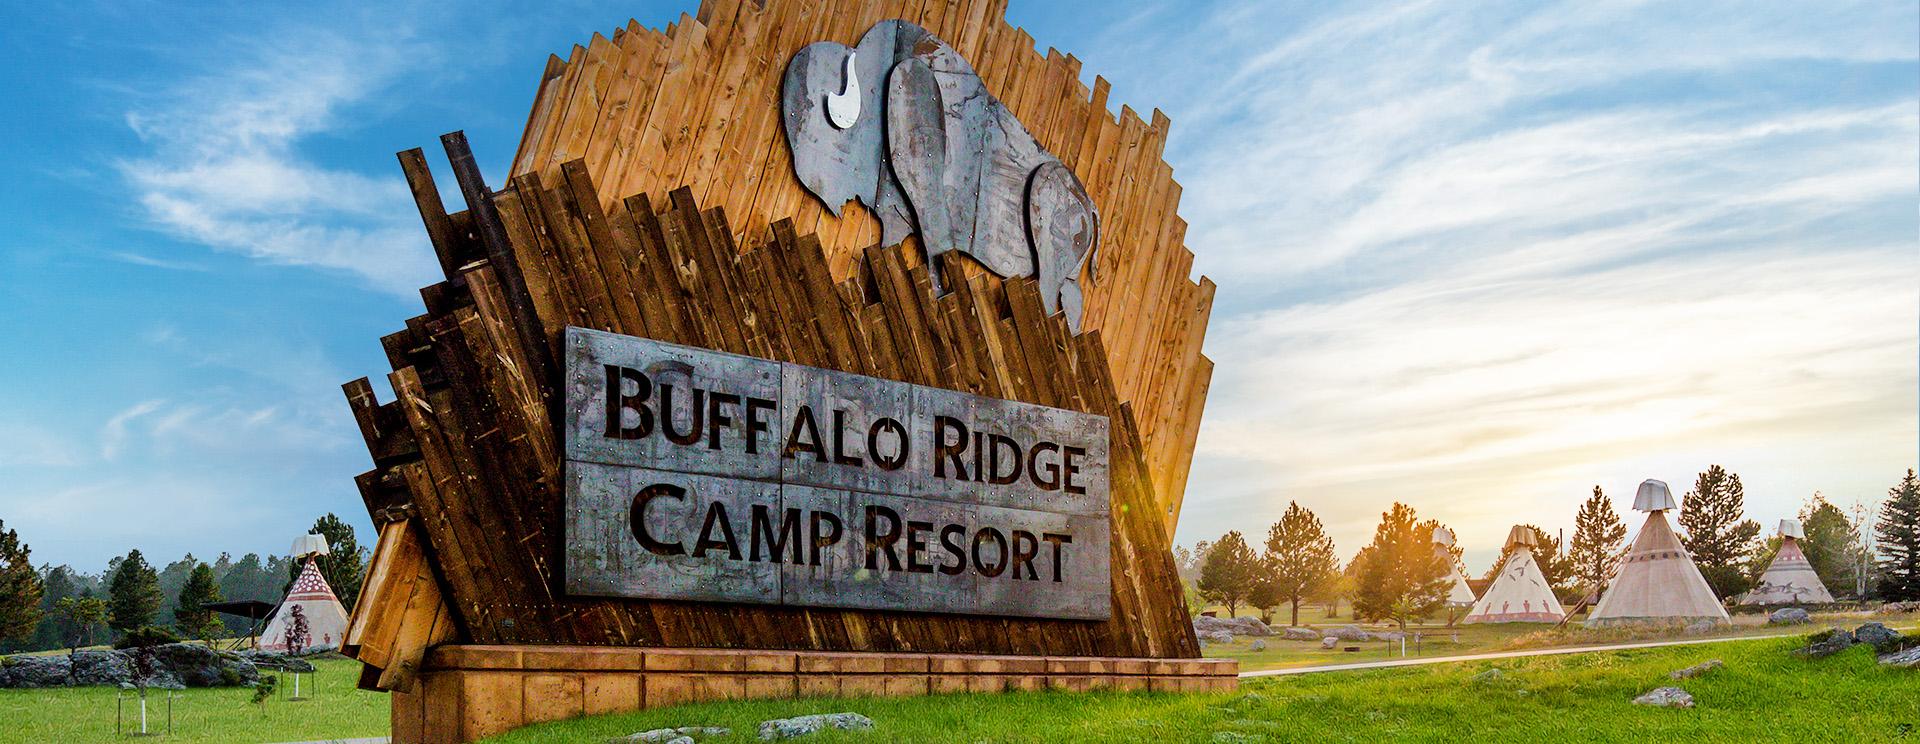 Buffalo Ridge Camp Resort